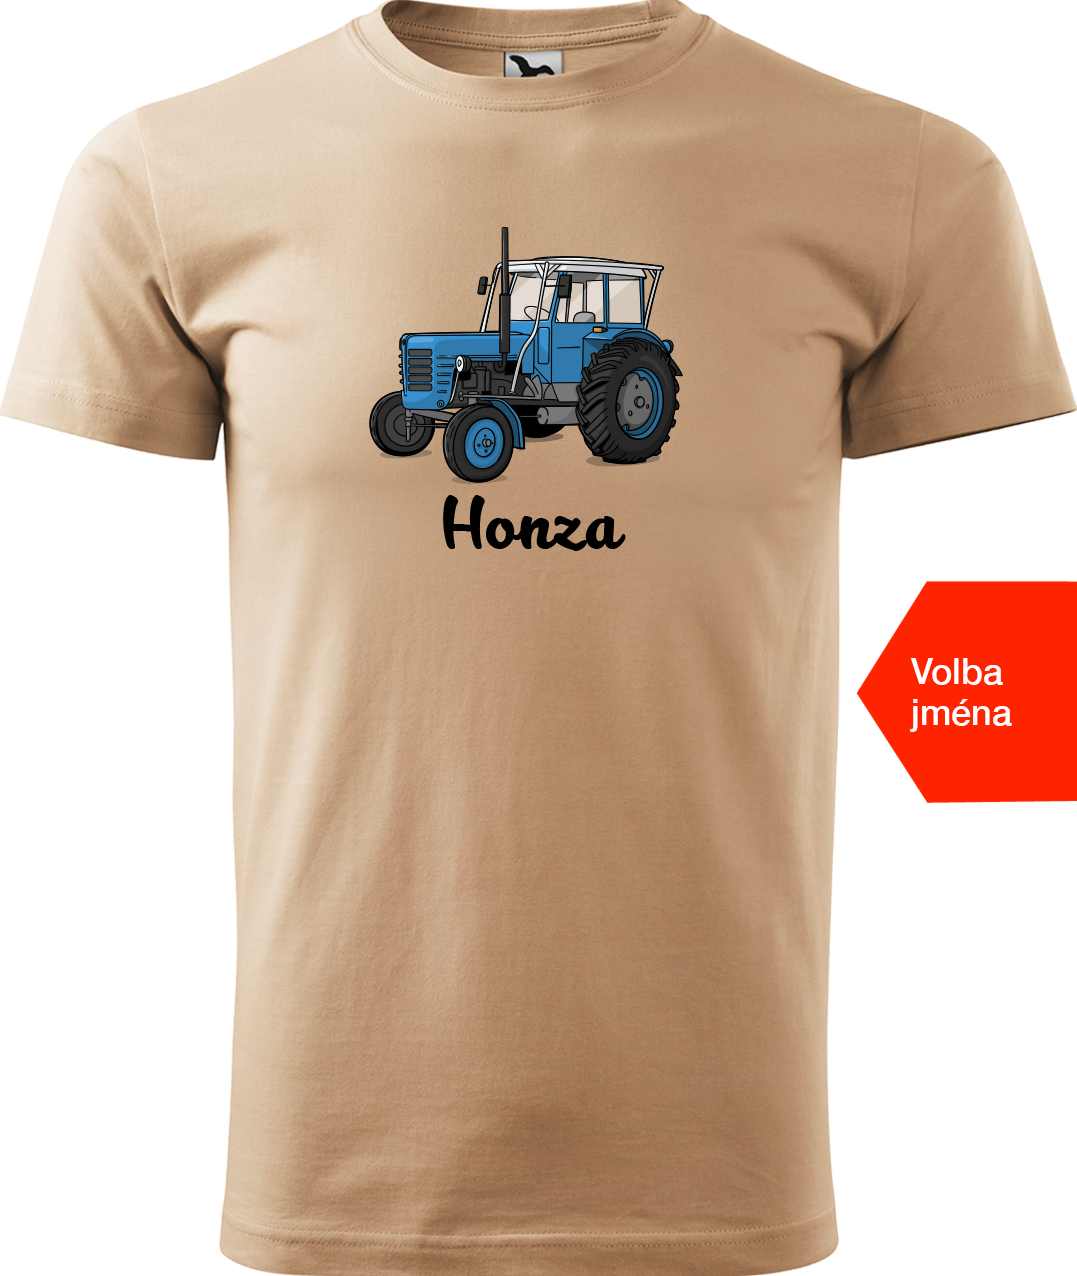 Tričko s traktorem a jménem - Starý traktor Velikost: M, Barva: Písková (08)